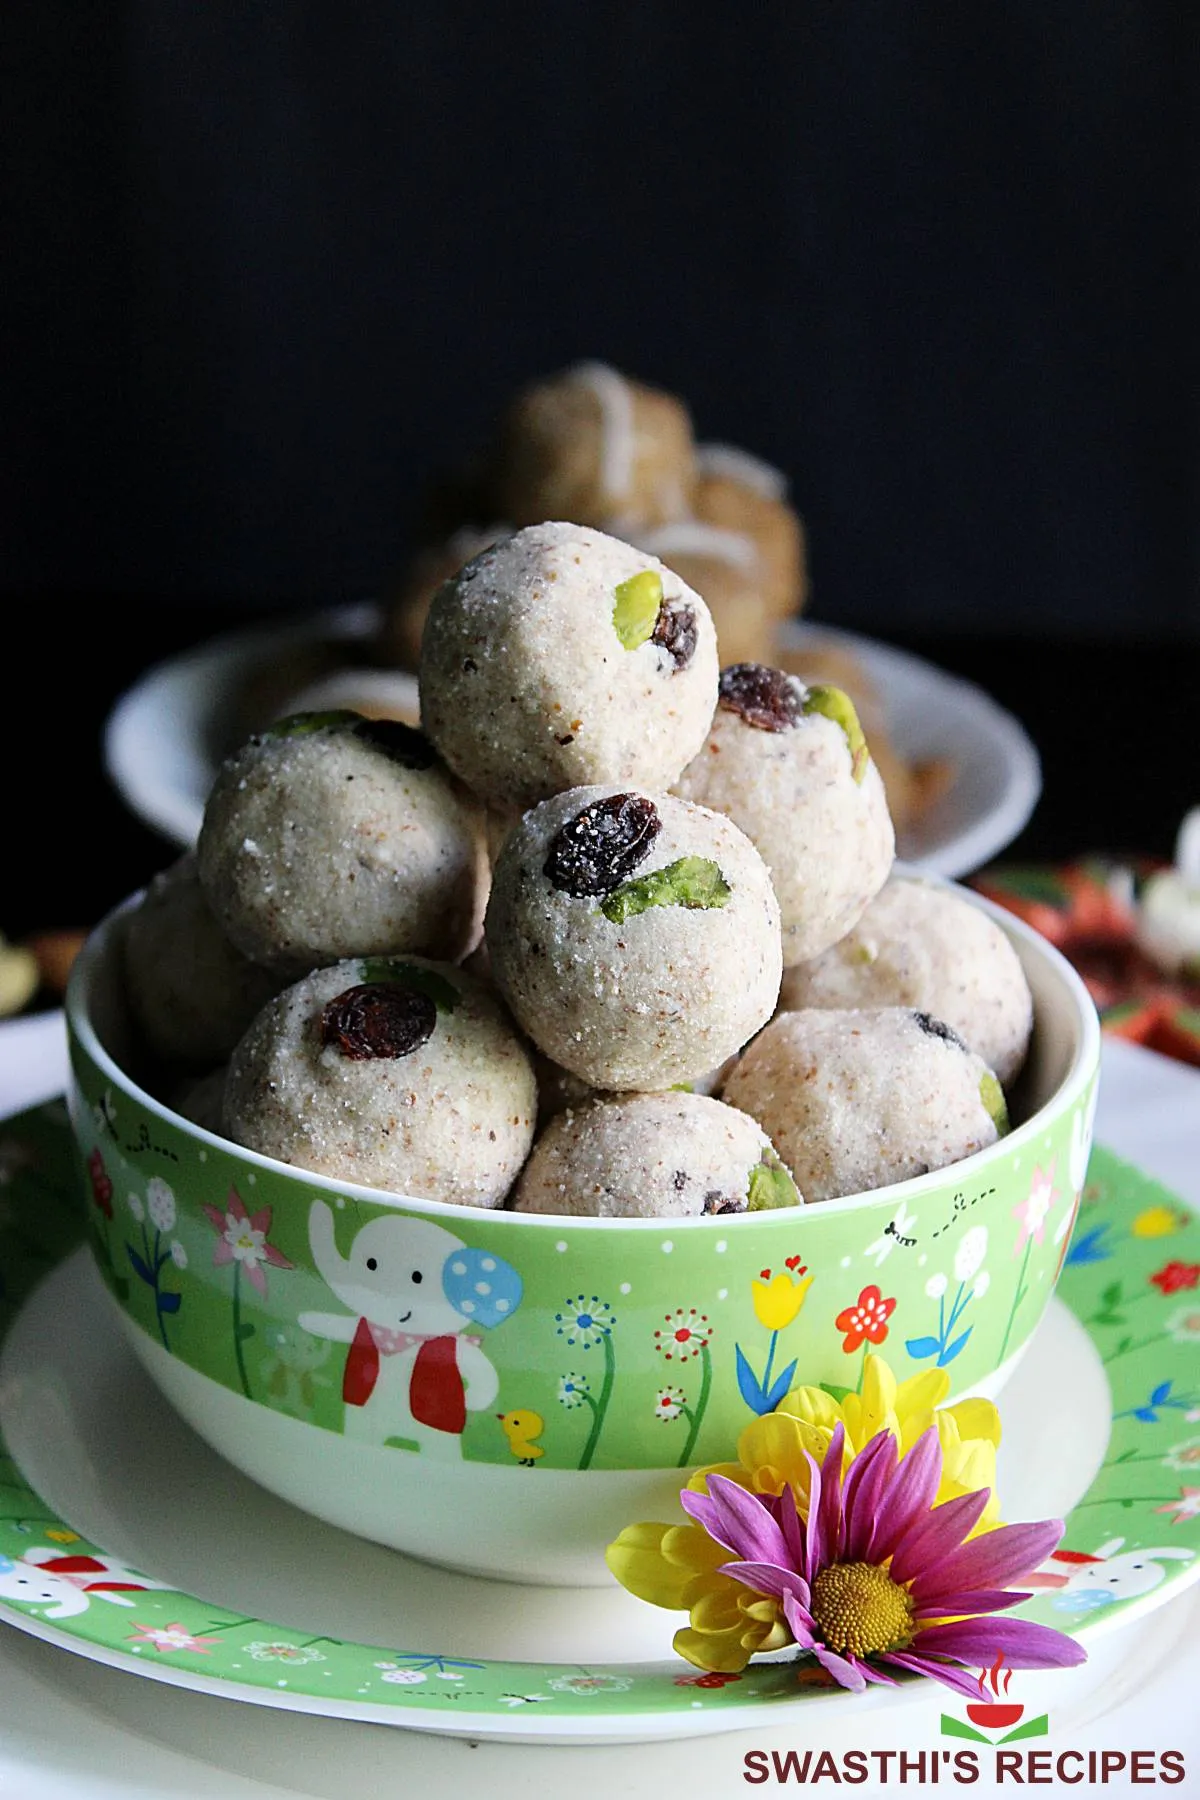 Badam Ladoo - almond flour balls